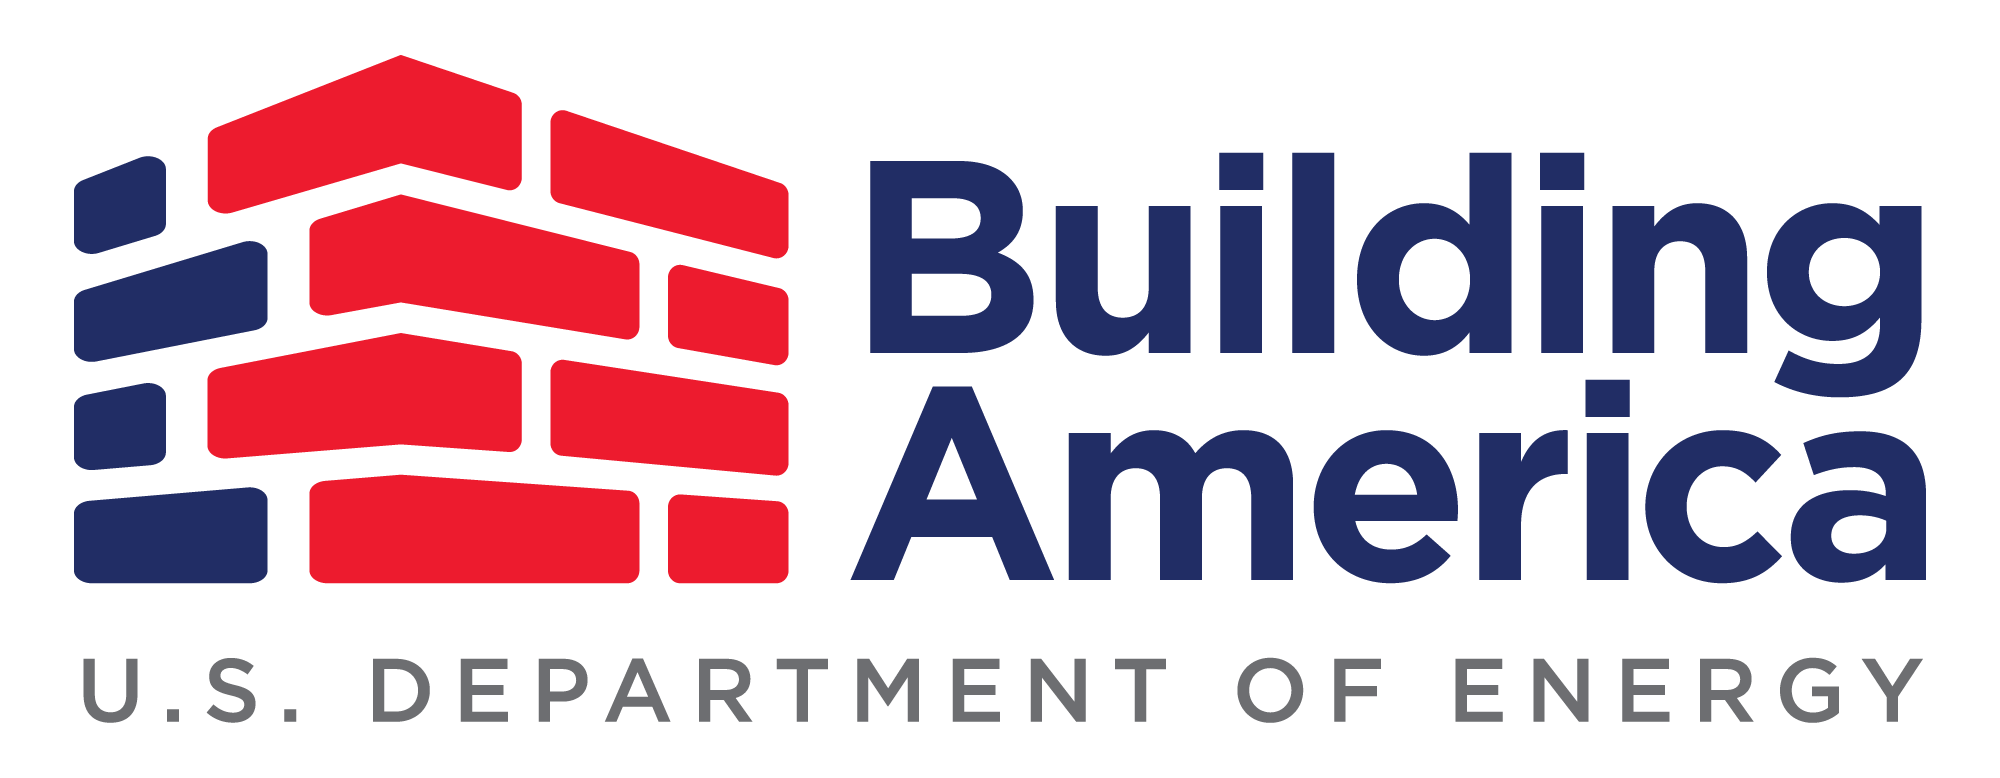 Building America, U.S. Department of Energy